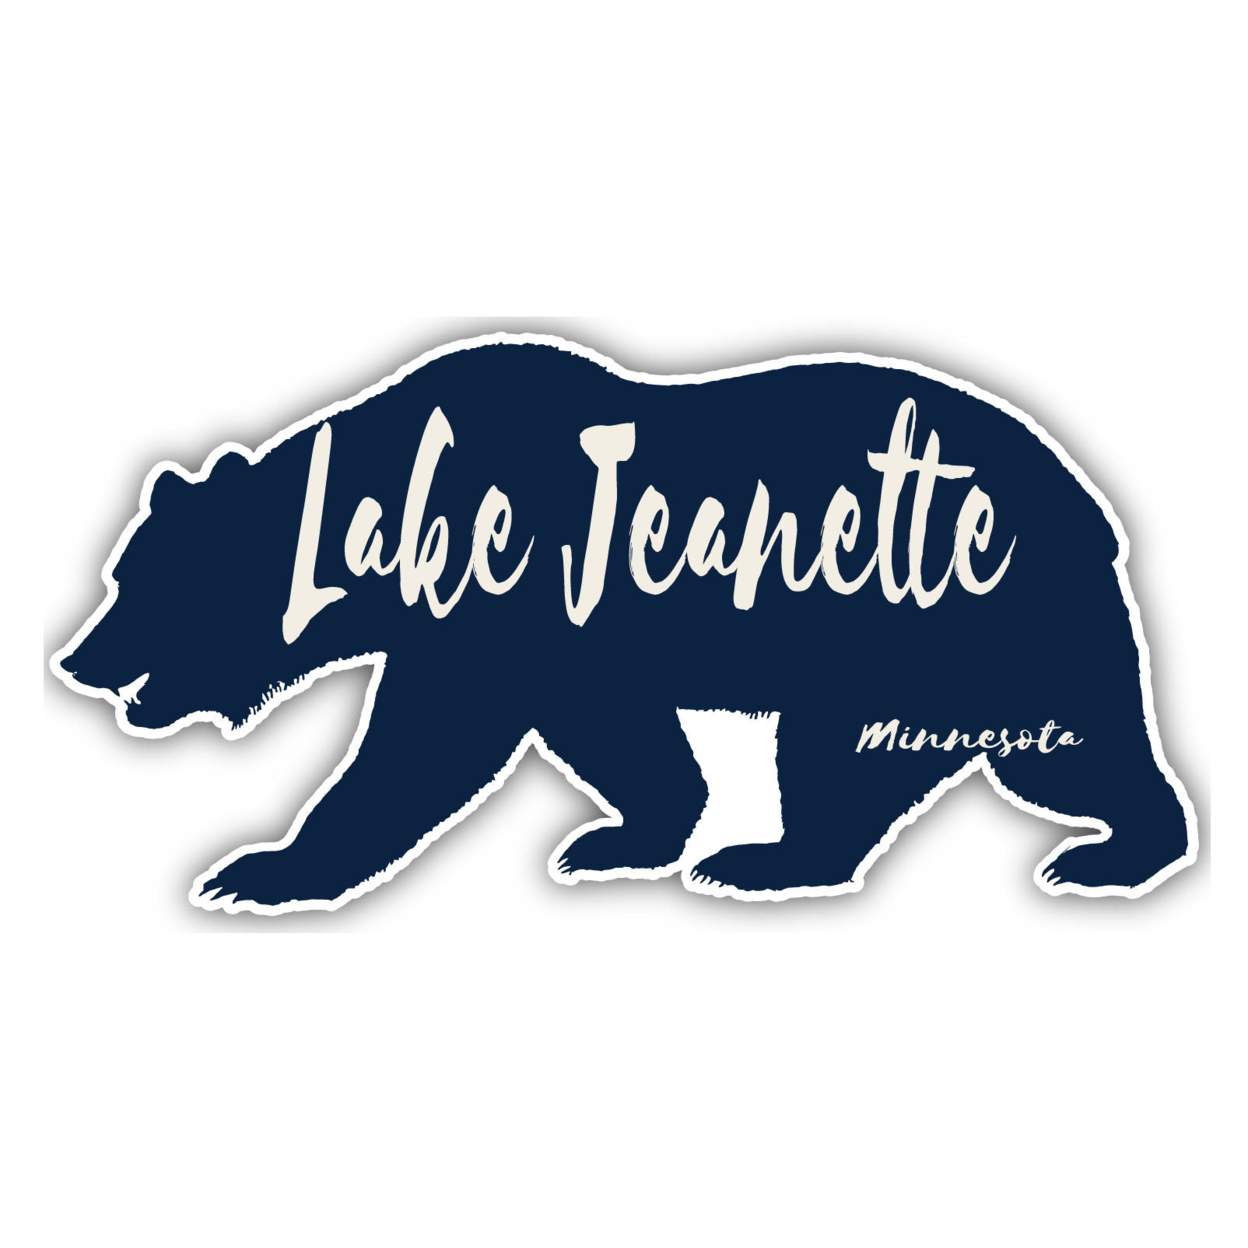 Lake Isabella California Souvenir Decorative Stickers (Choose Theme And Size) - 4-Inch, Bear